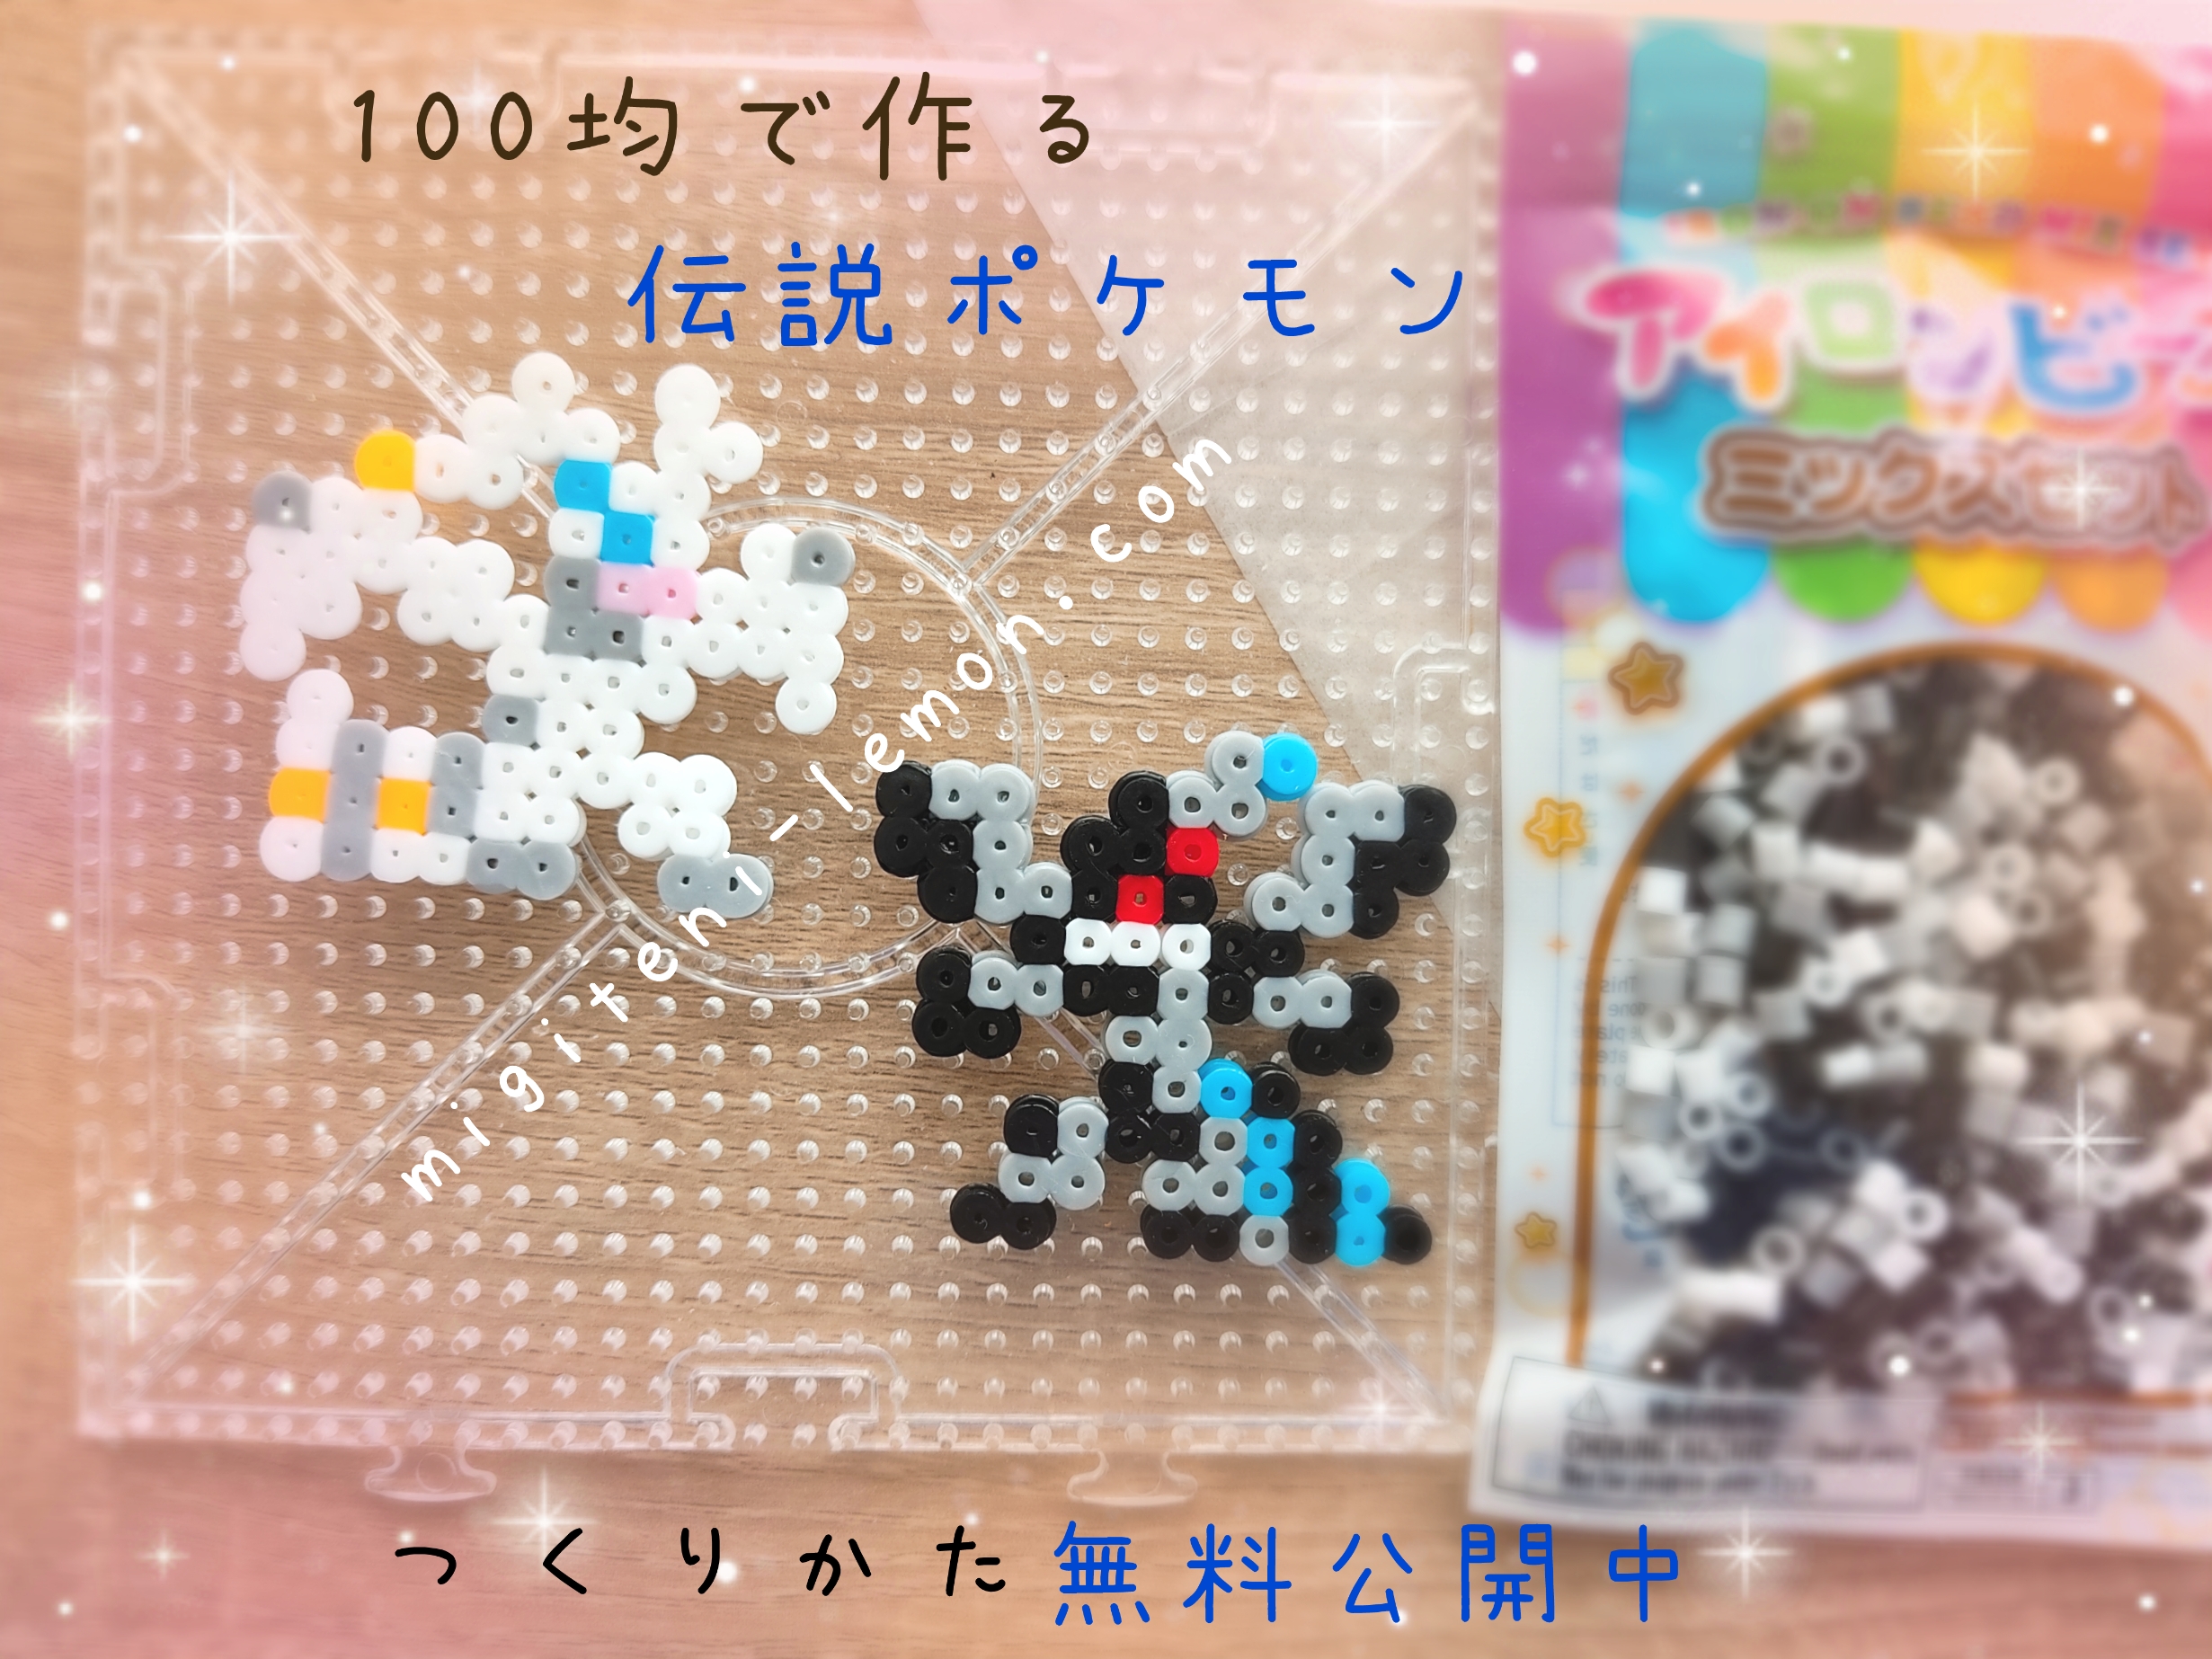 reshiram-zekrom-legend-pokemon-dragon-handmade-iron-beads-free-zuan-daiso-small-square-100kin-kids-black-white